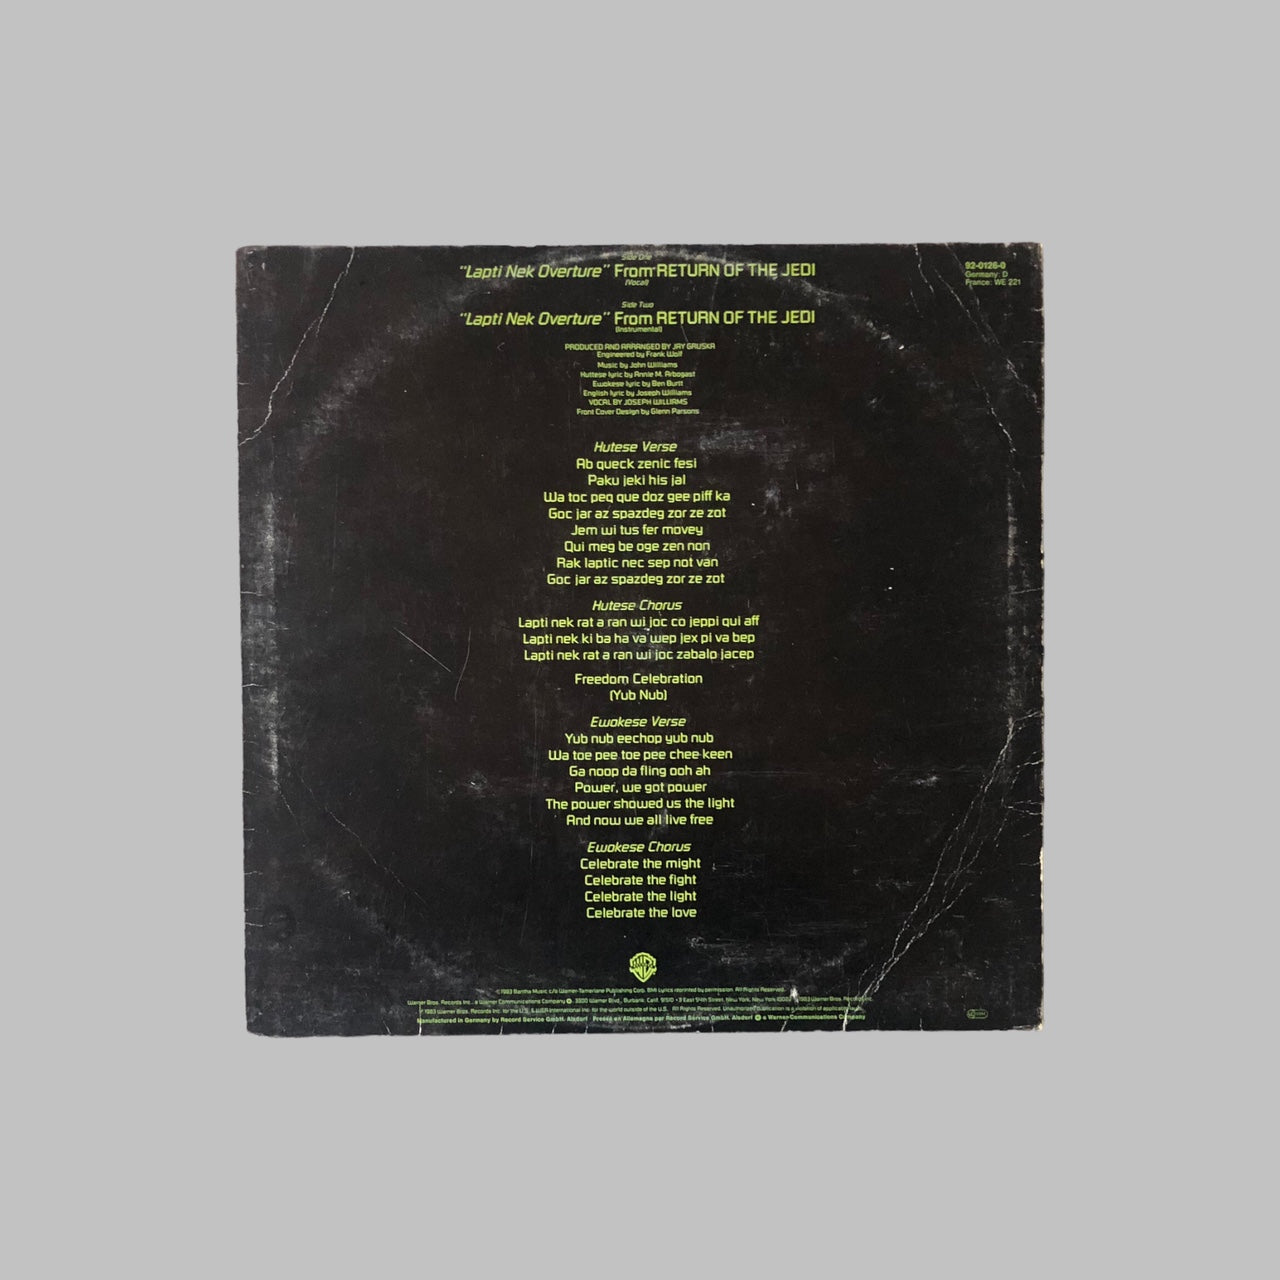 Maxi 45 Vinyl - Urth - Overture (Return of the Jedi)